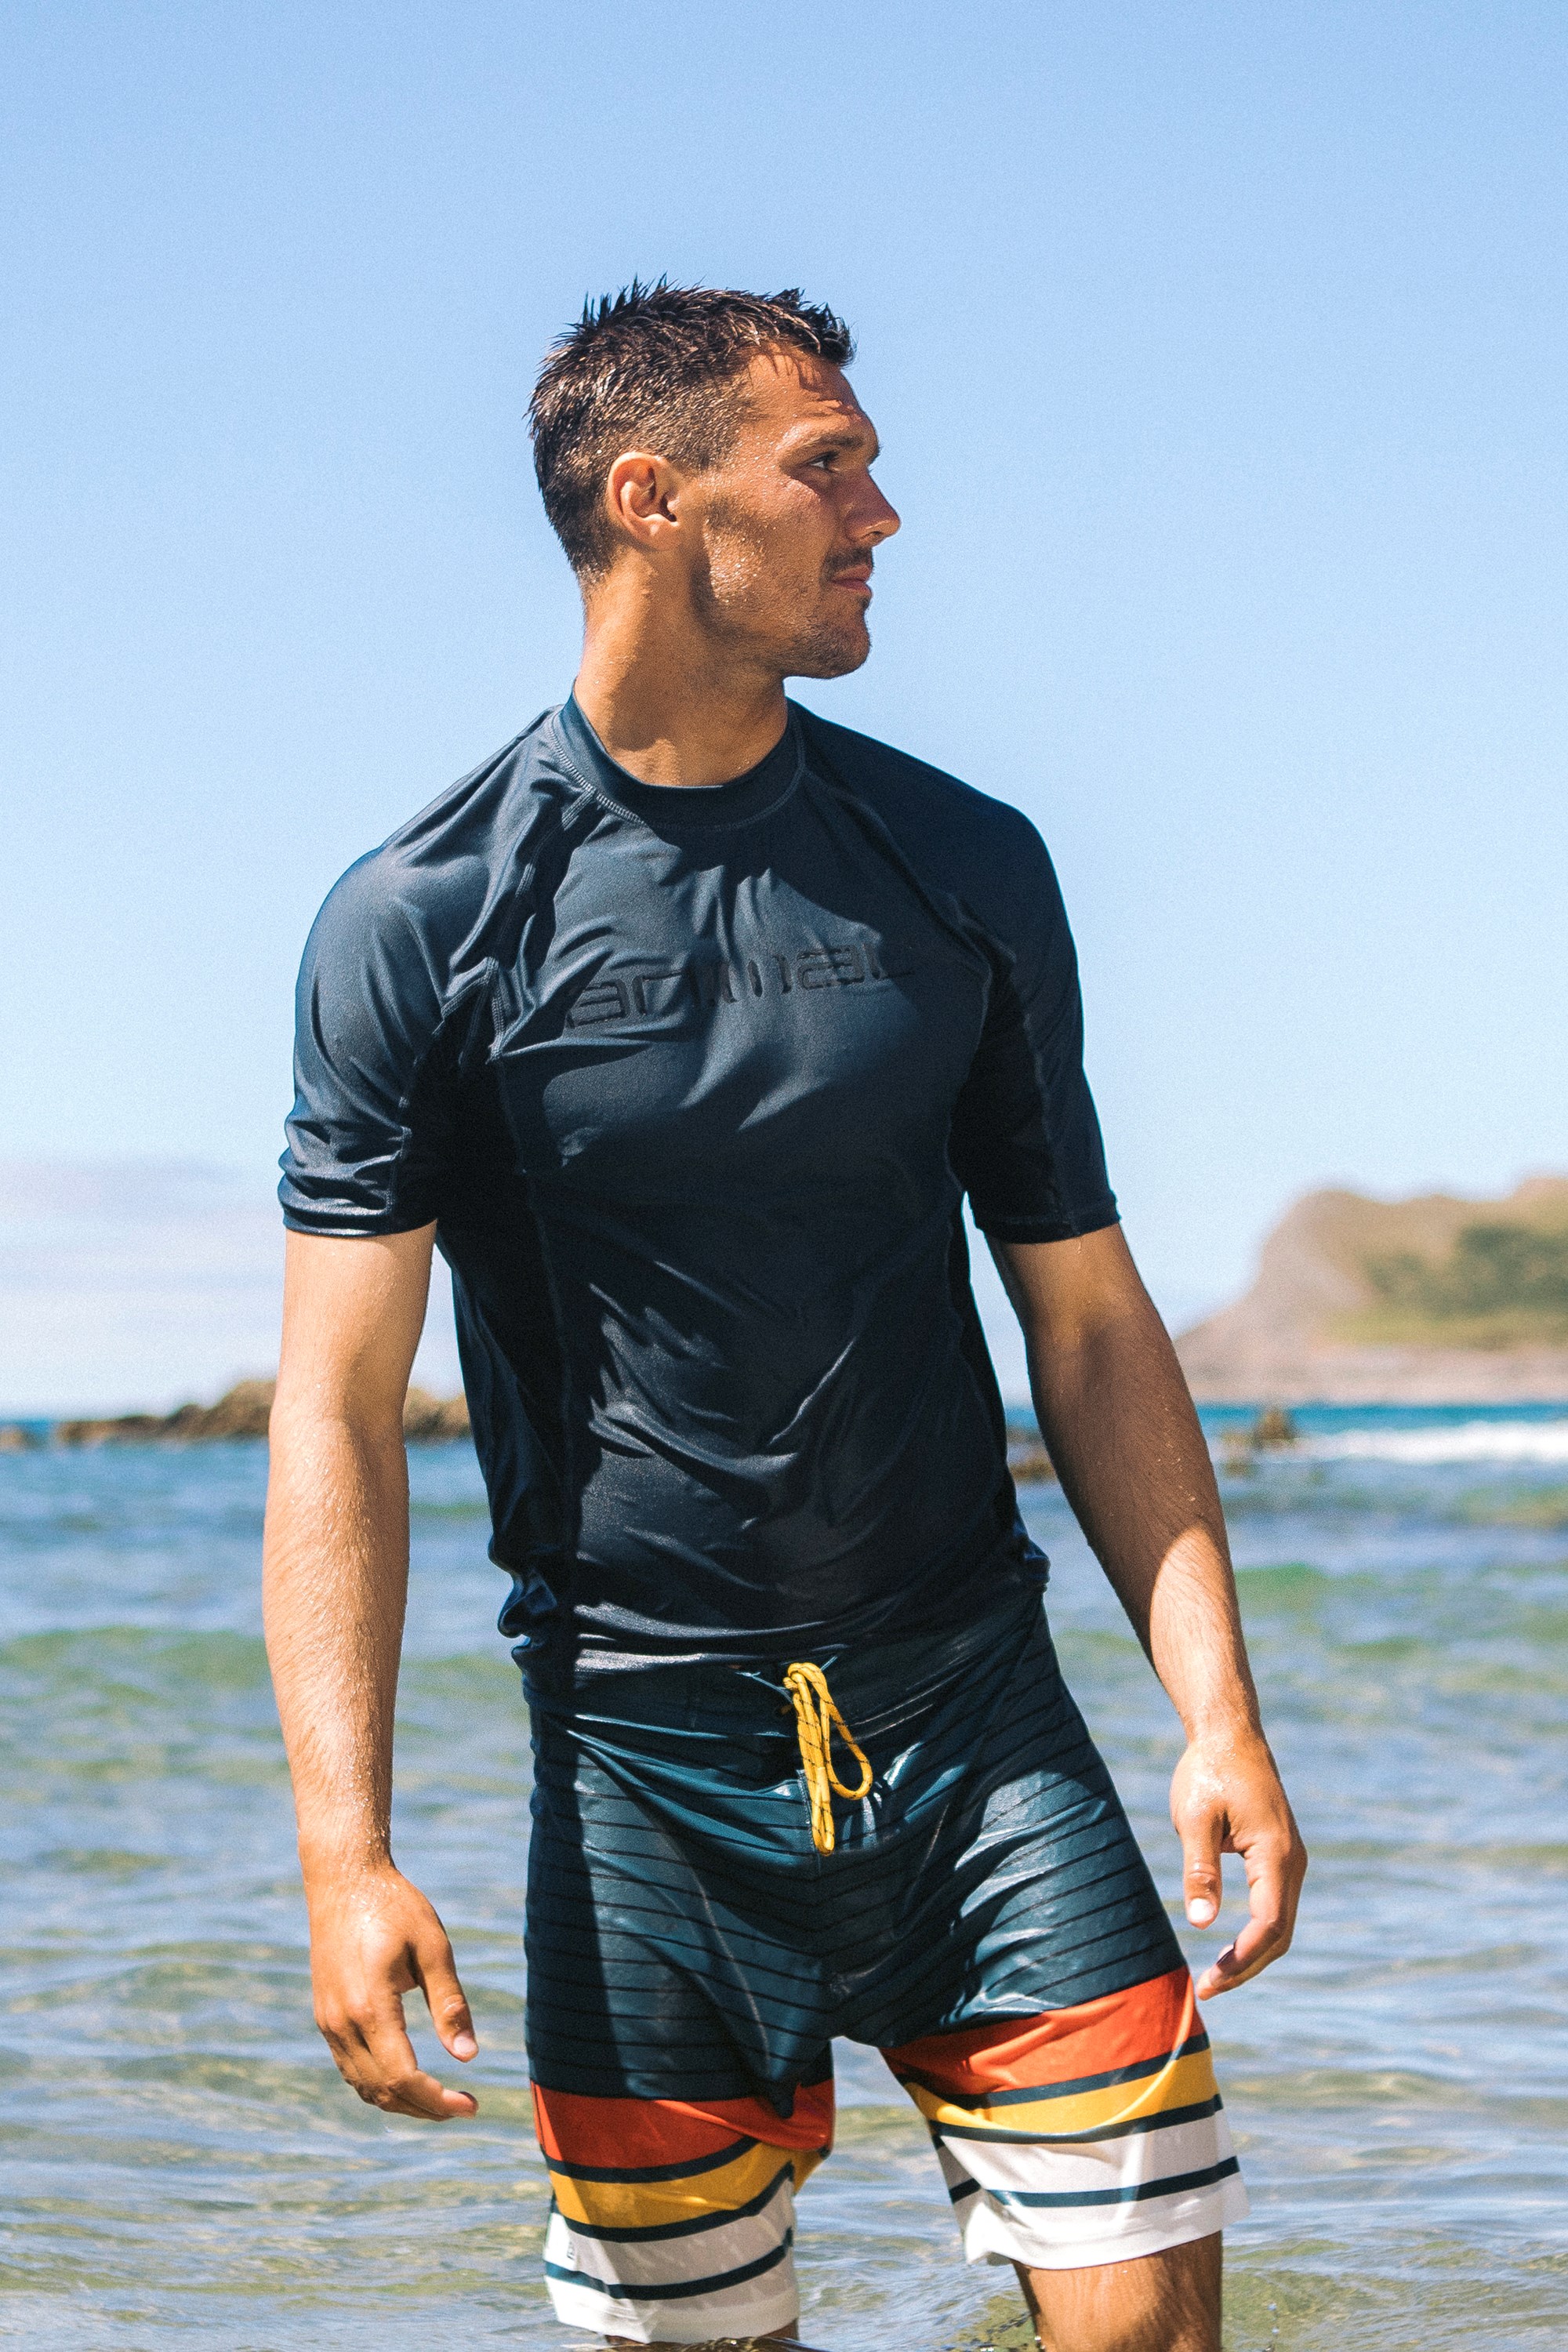 Men's Big & Tall Slim Fit Long Sleeve Rash Guard Swim Shirt - Goodfellow &  Co™ Gray 2XLT